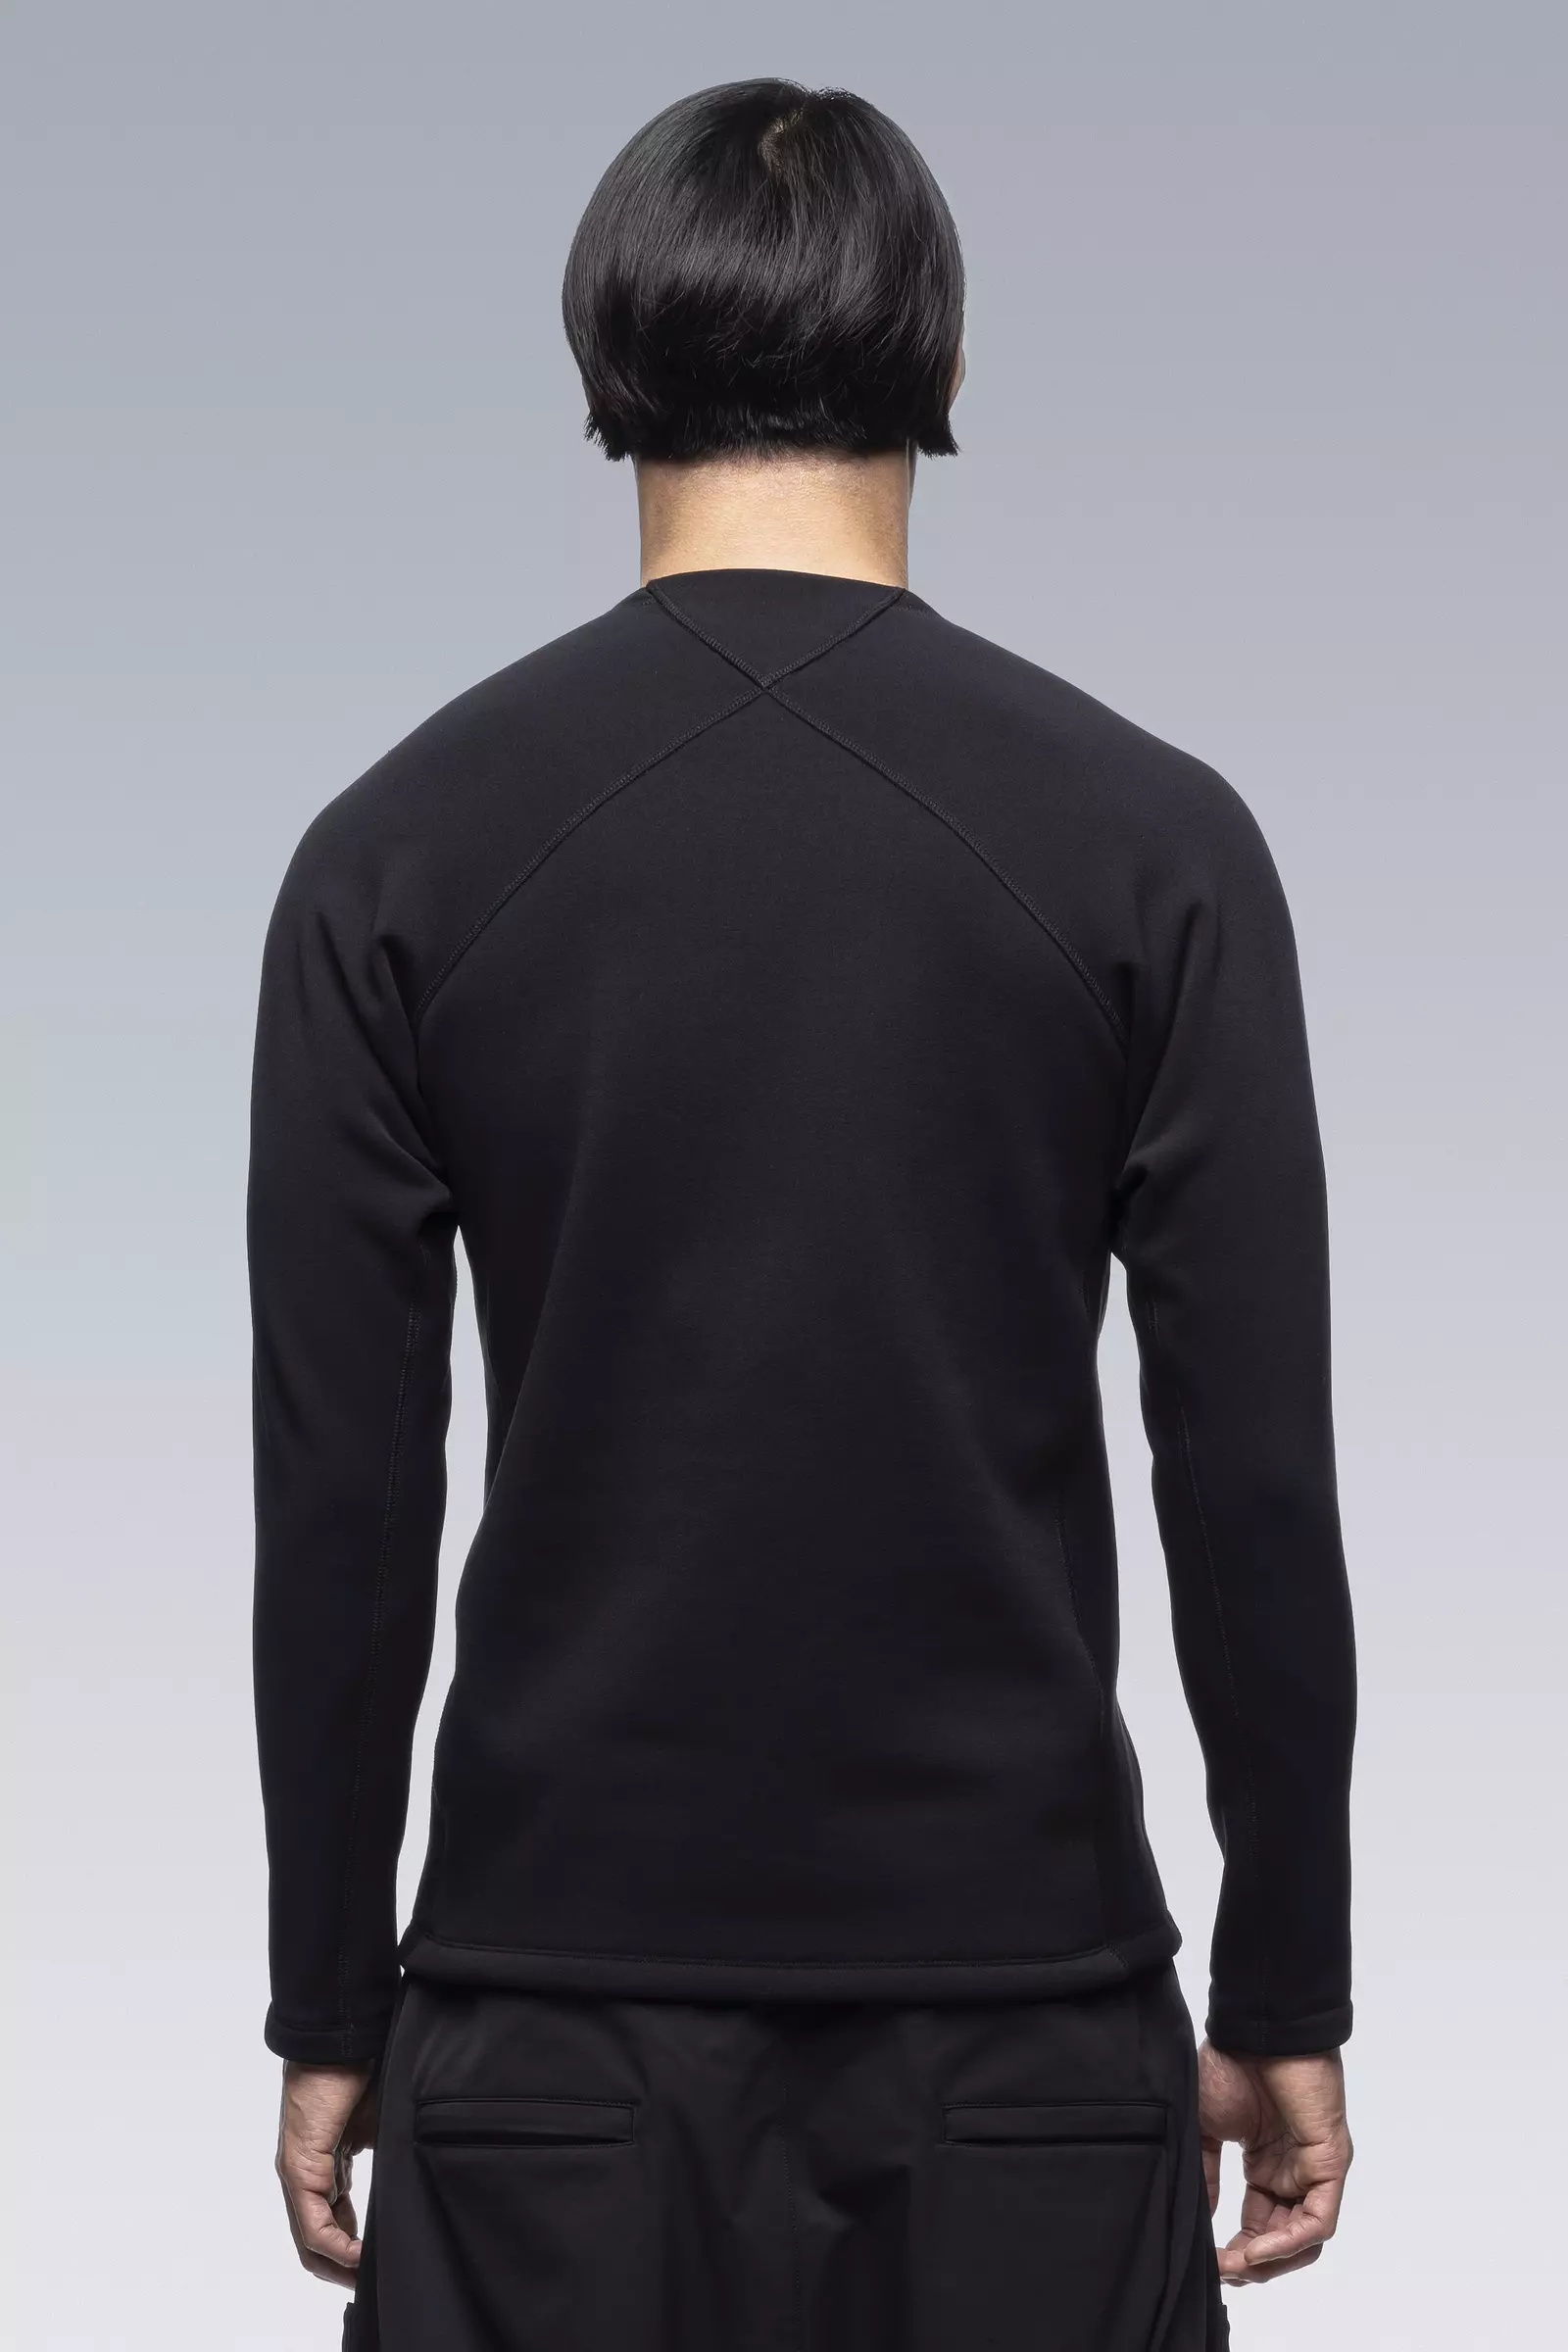 S27-PS Powerstretch® Longsleeve Shirt Black - 4